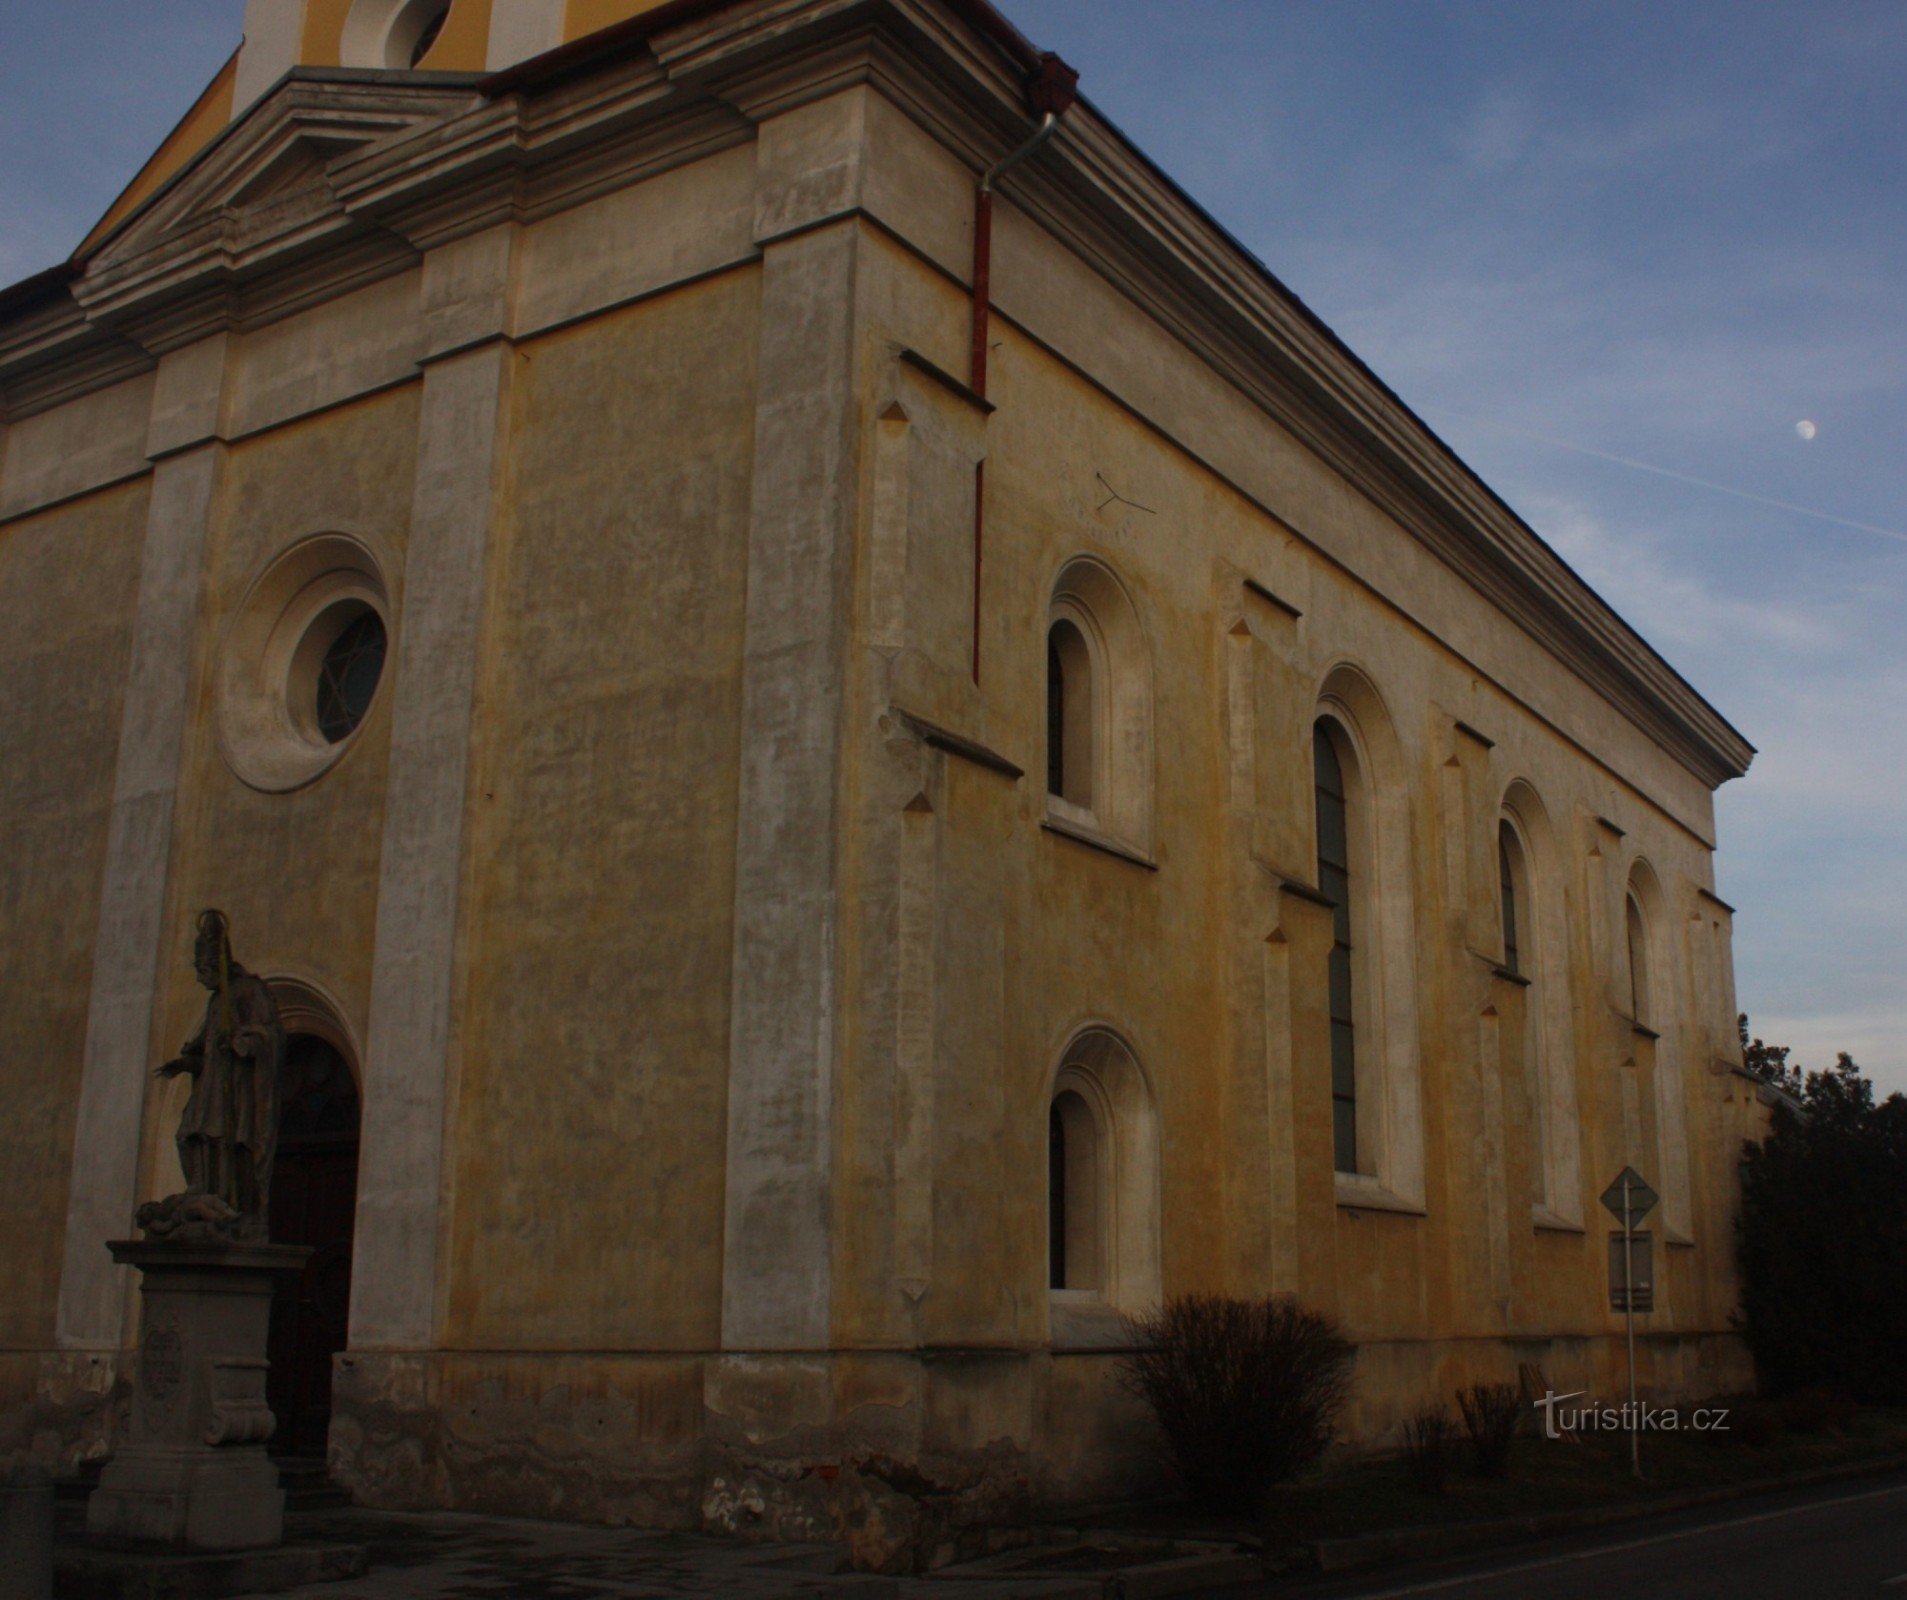 Vrchoslavicky church